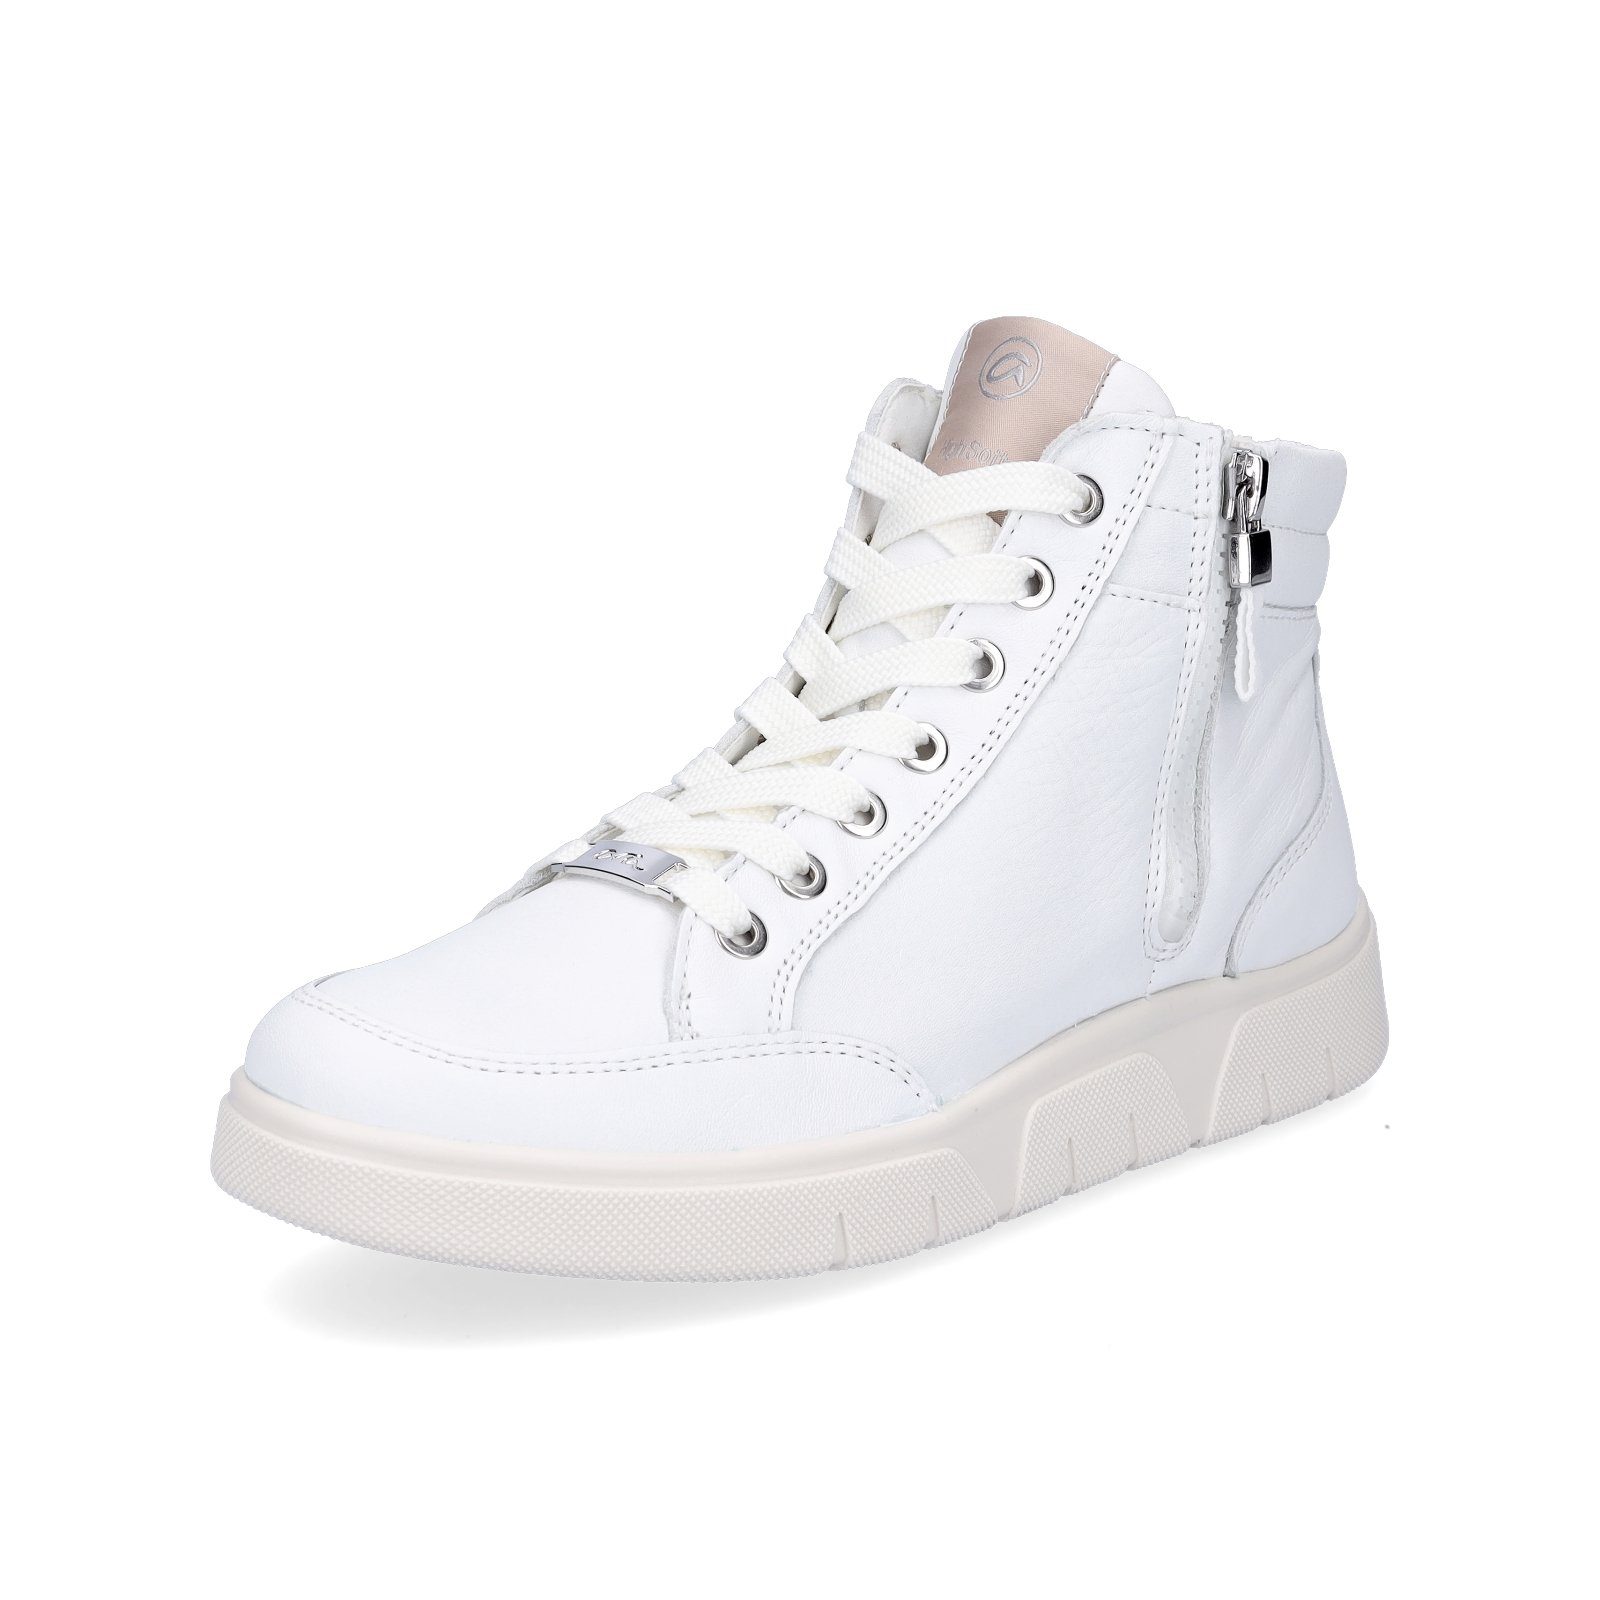 Ara Ara Damen Leder High Sneaker 047968 Sneaker weiß weiß